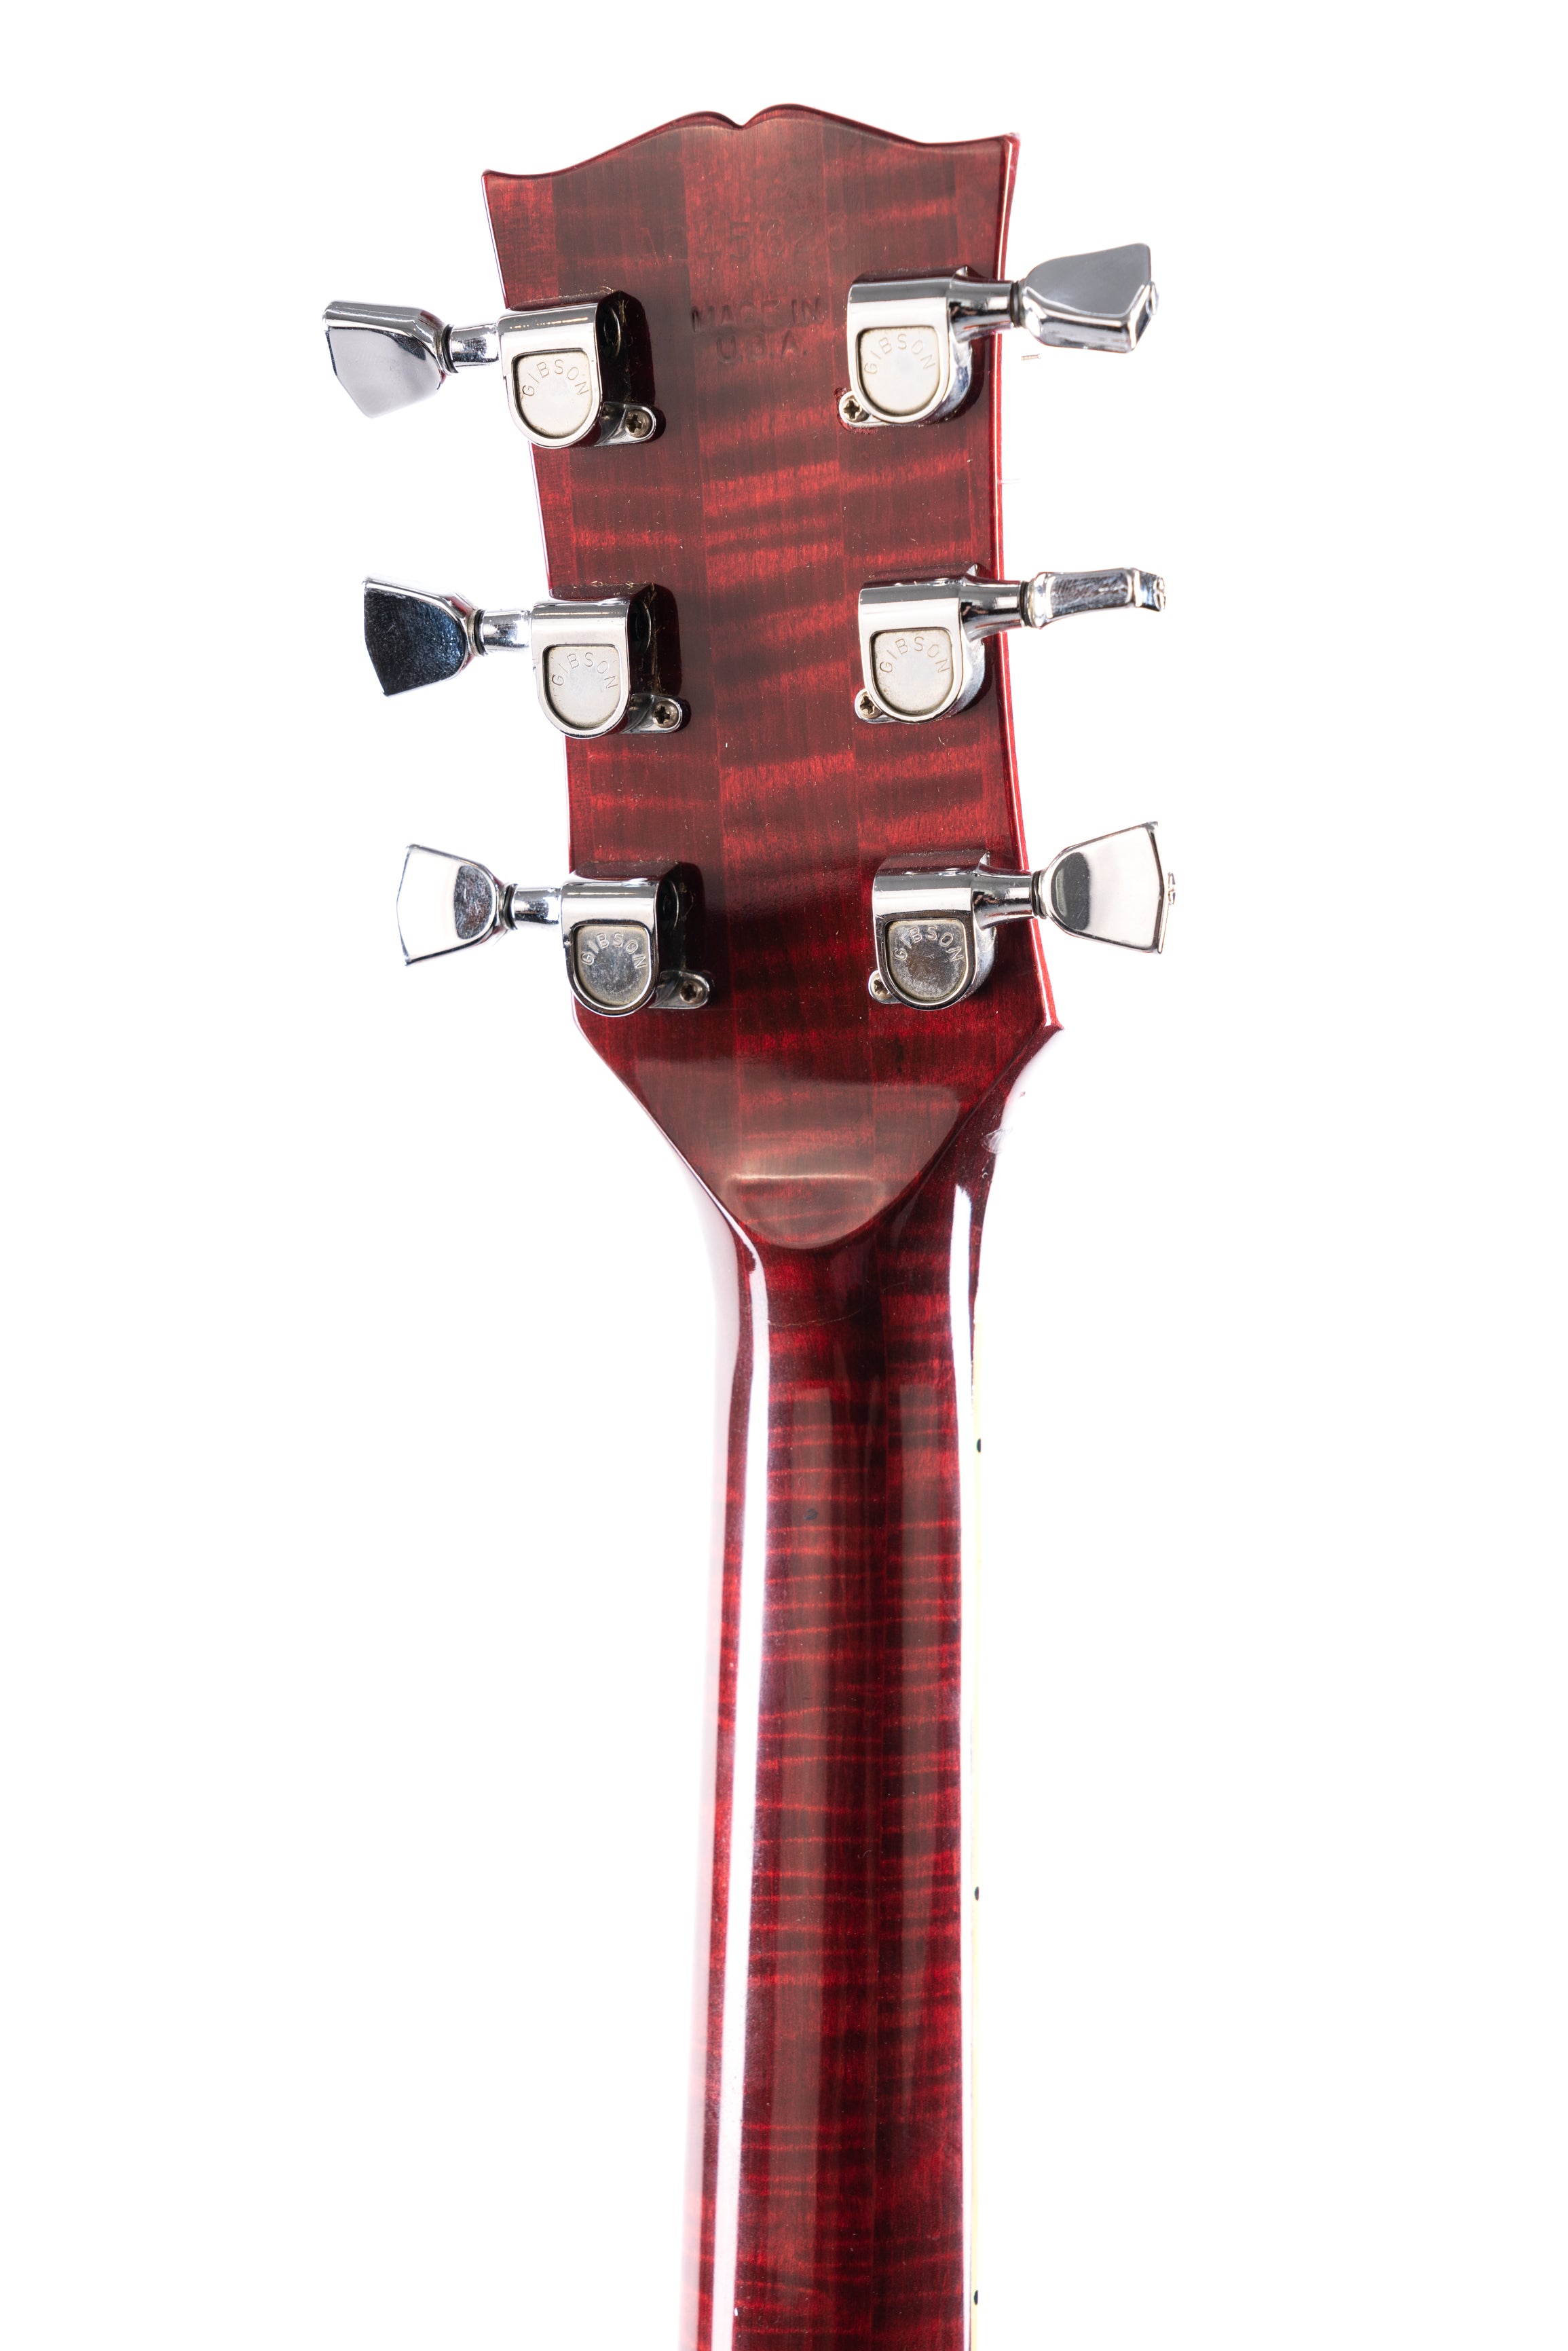 1972 Gibson Dove Custom Guitar